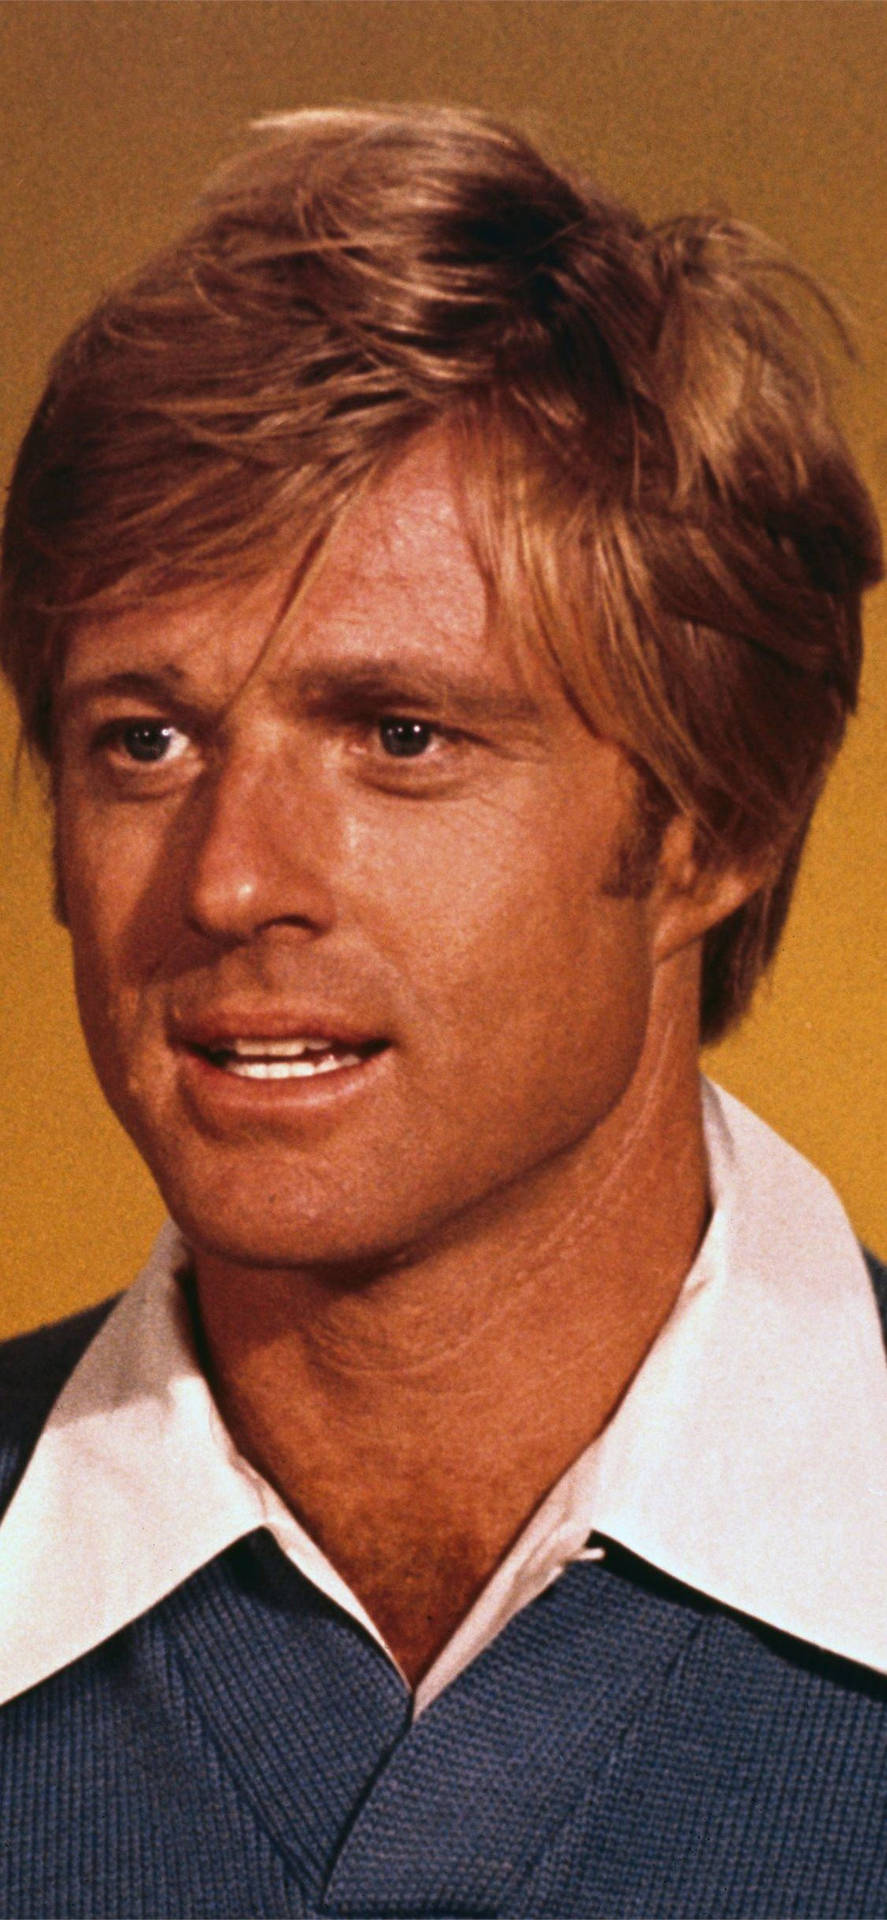 Iconic Shot Of Oscar-winning Actor, Robert Redford Background